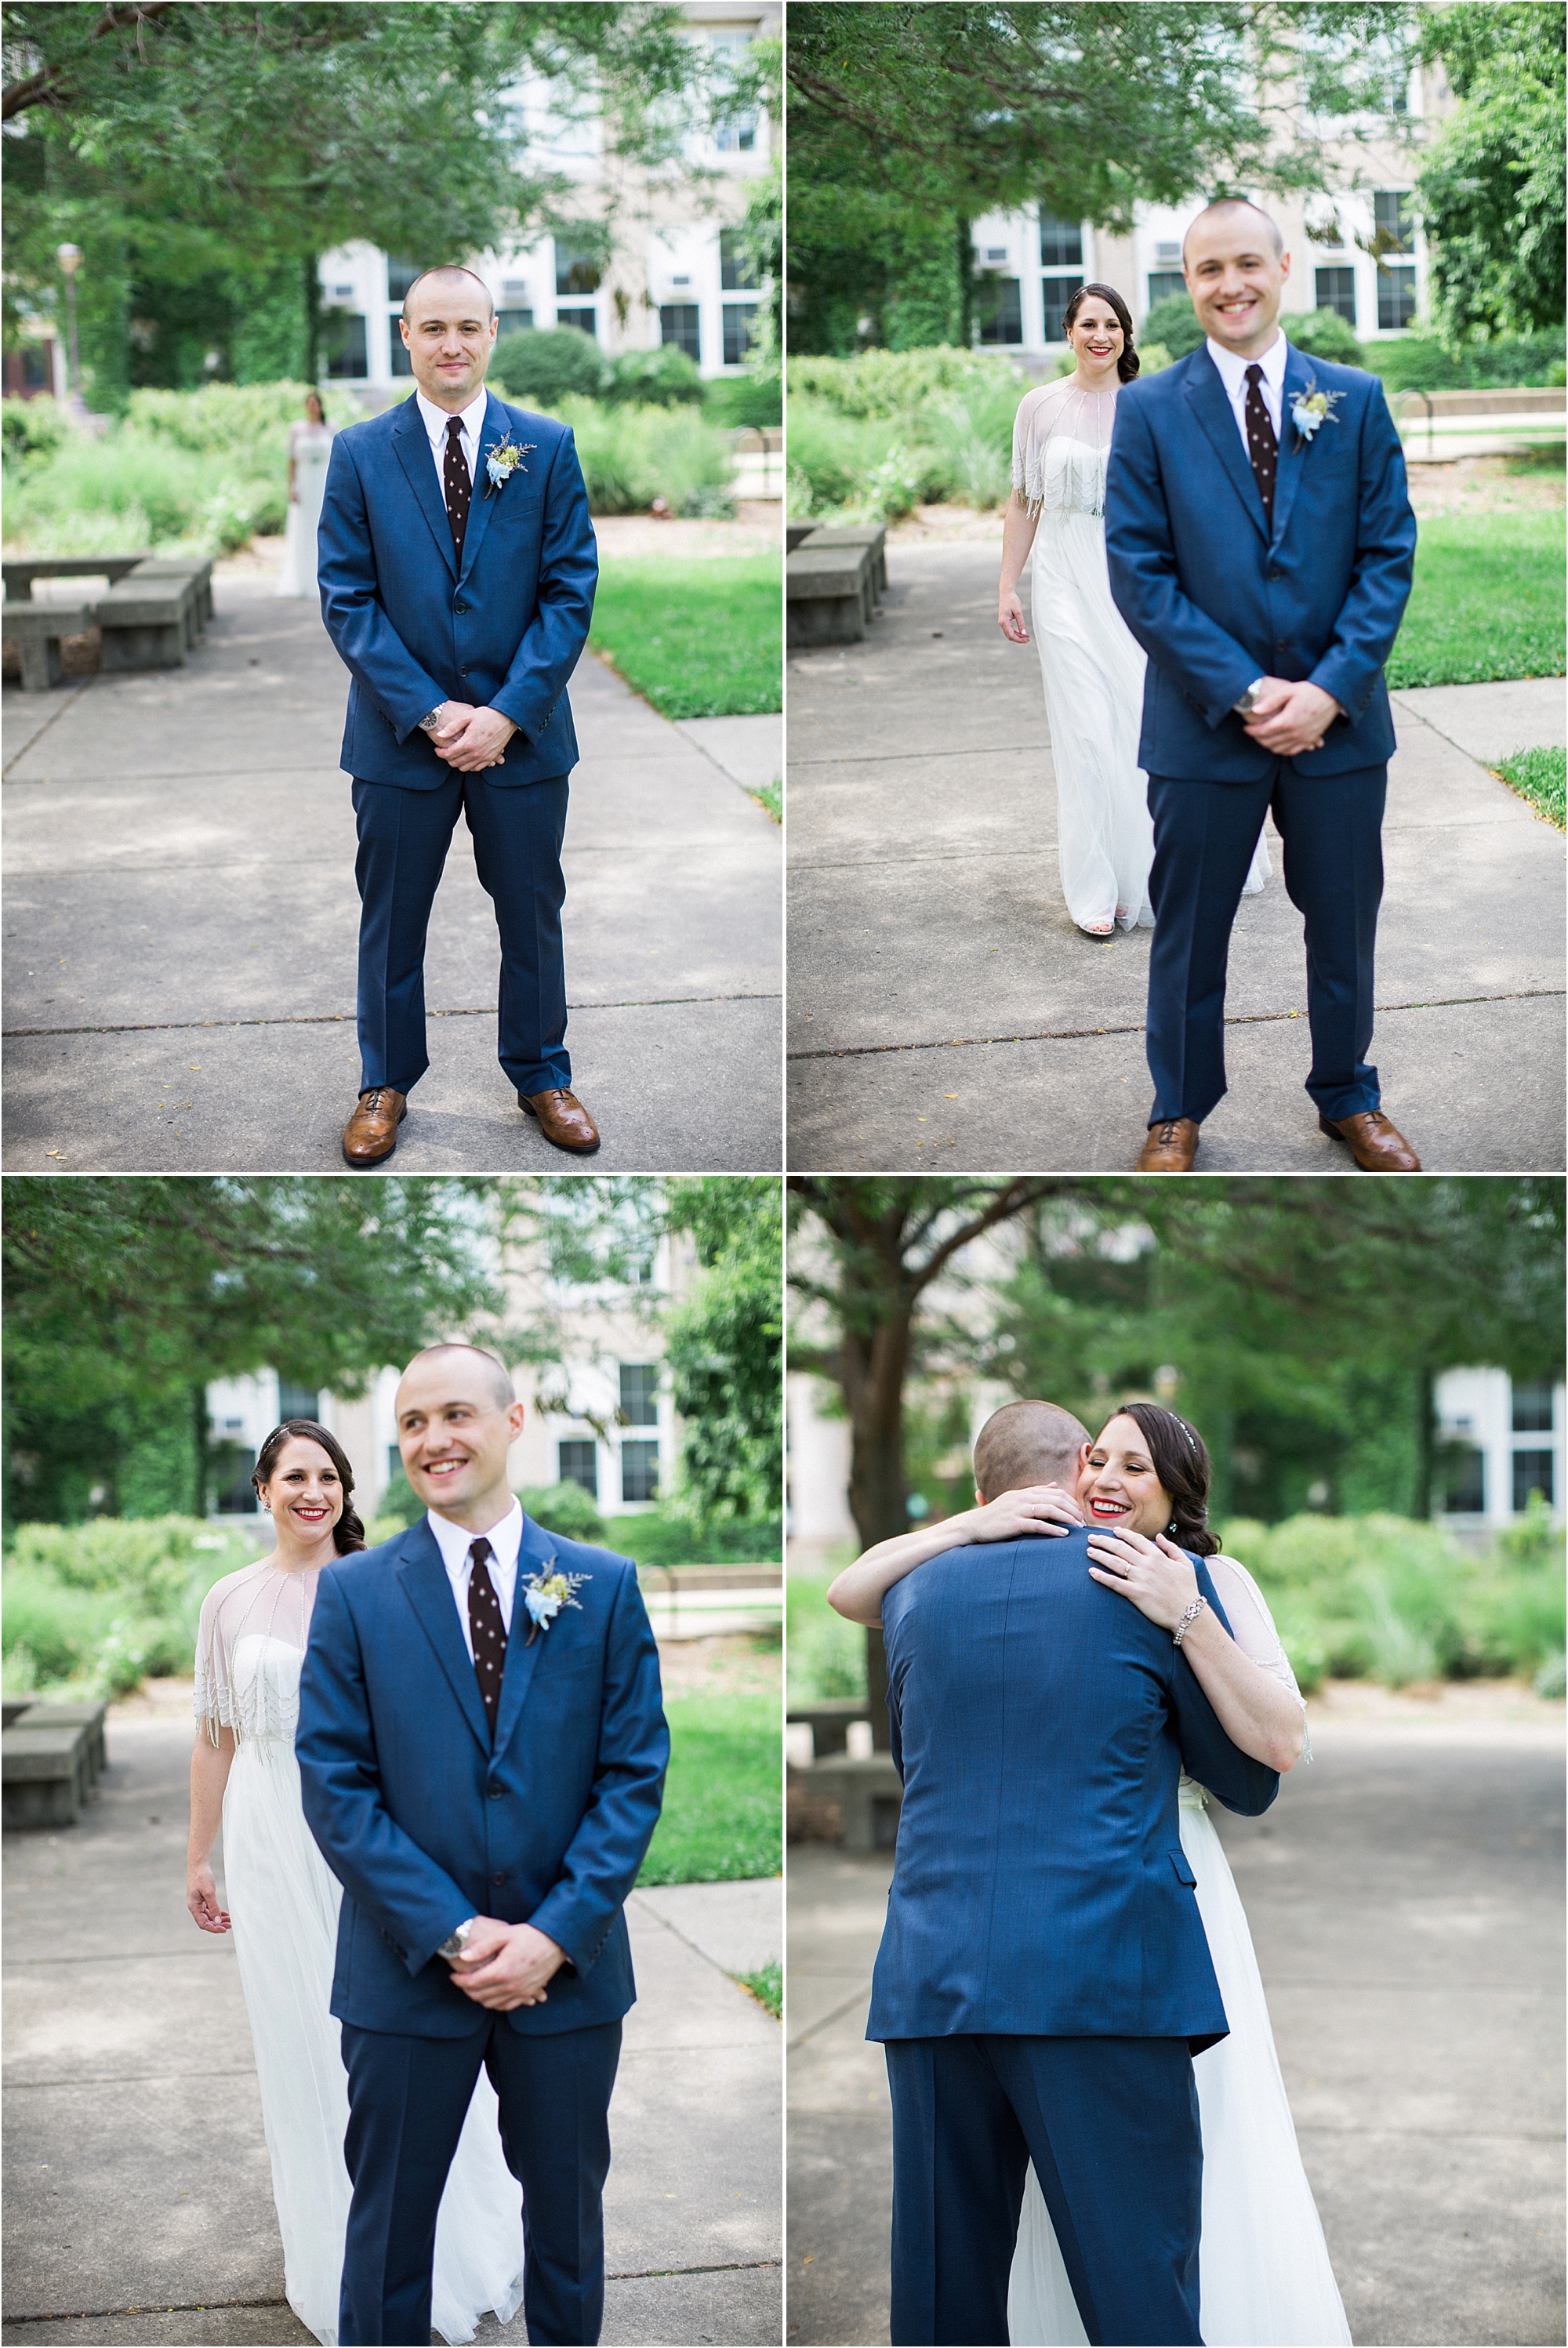 Nicole + Steve's Wedding // July 18, 2015